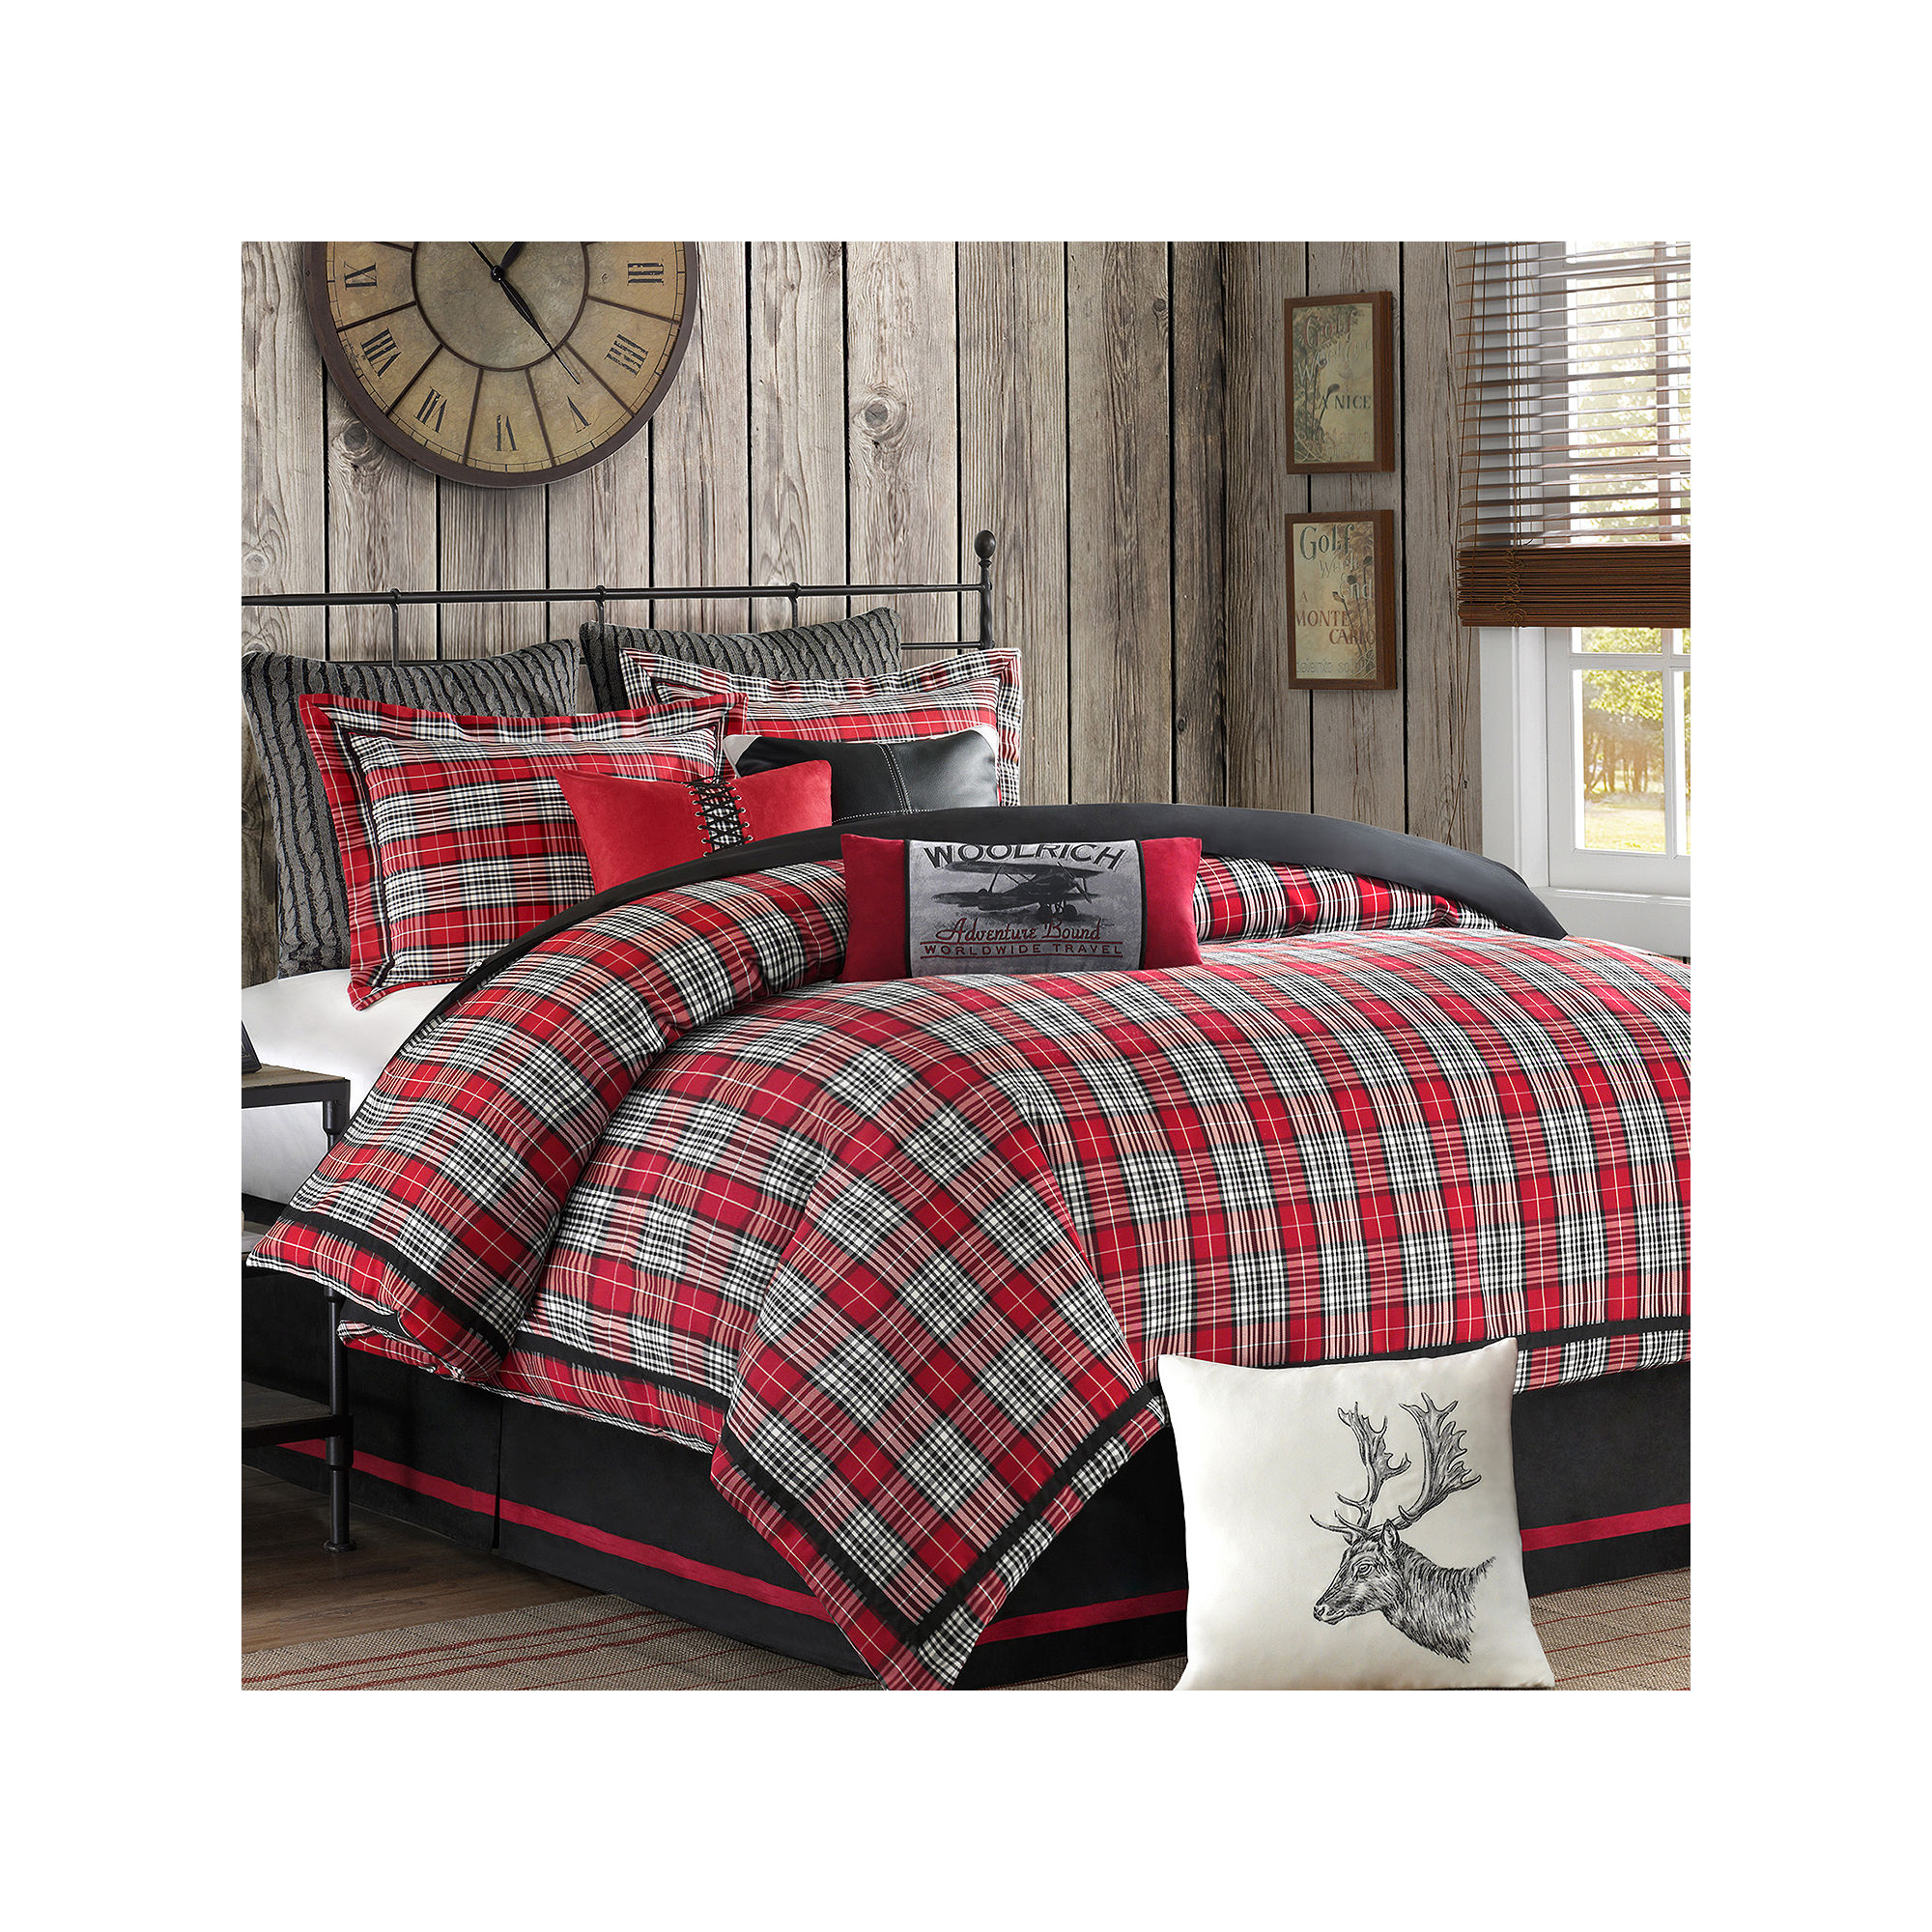 Woolrich Williamsport Jacquard Comforter Set